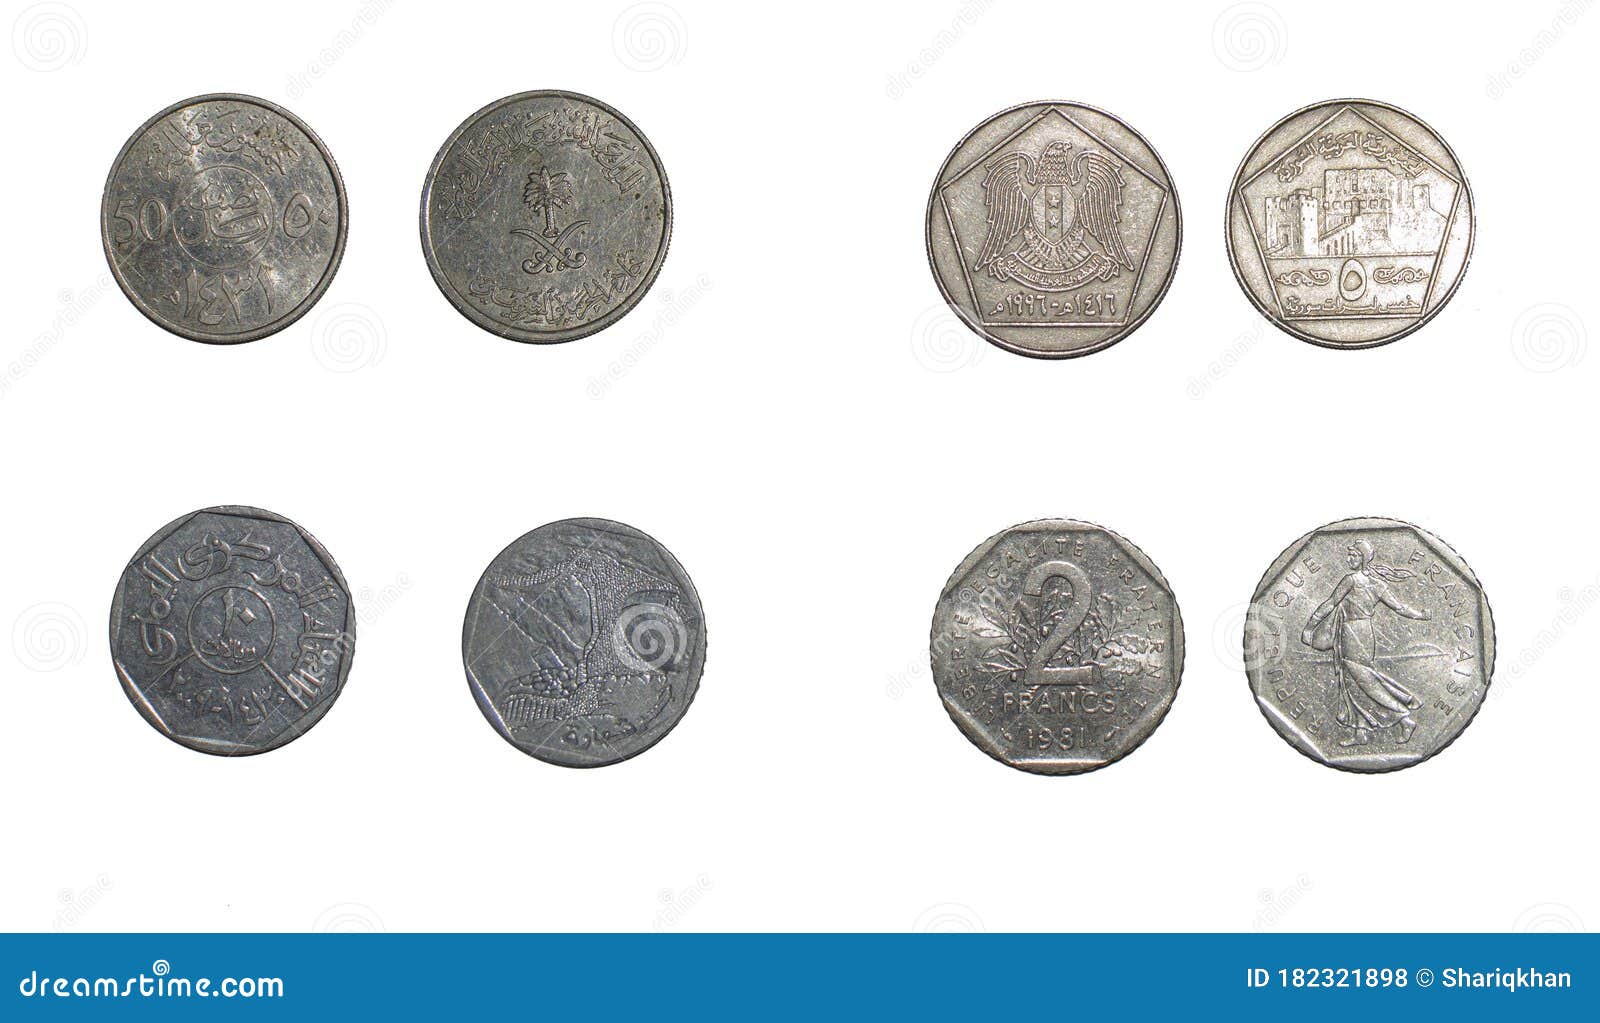 currency coins of saudi arabia syria yaman france